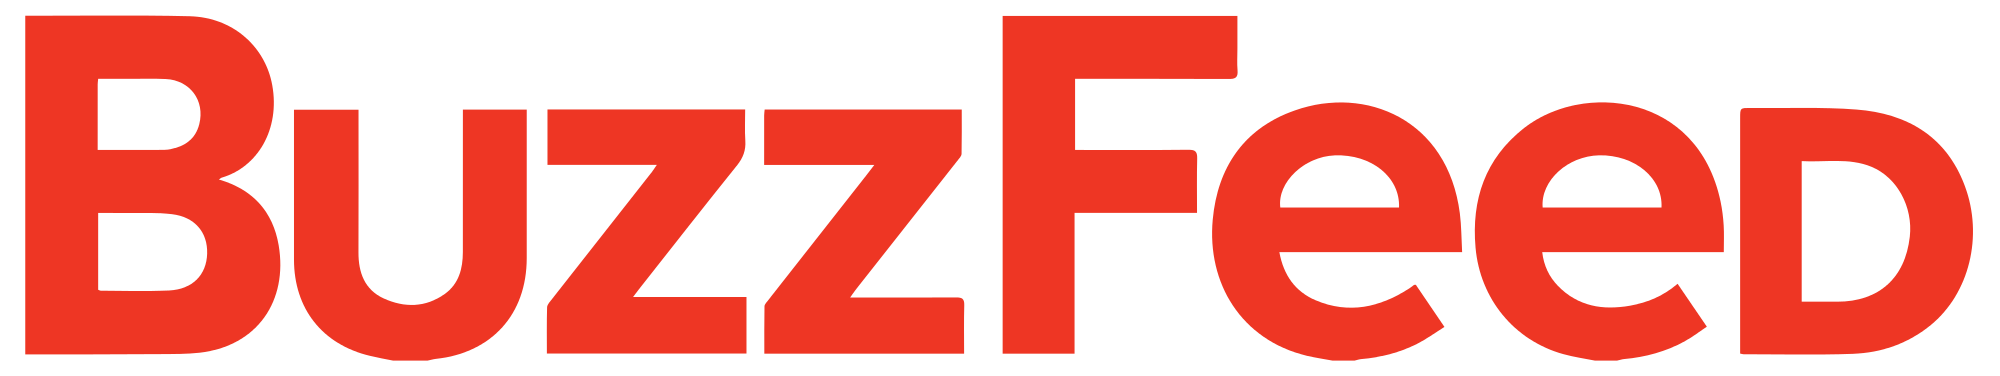 Buzzfeed - Columbia Entrepren